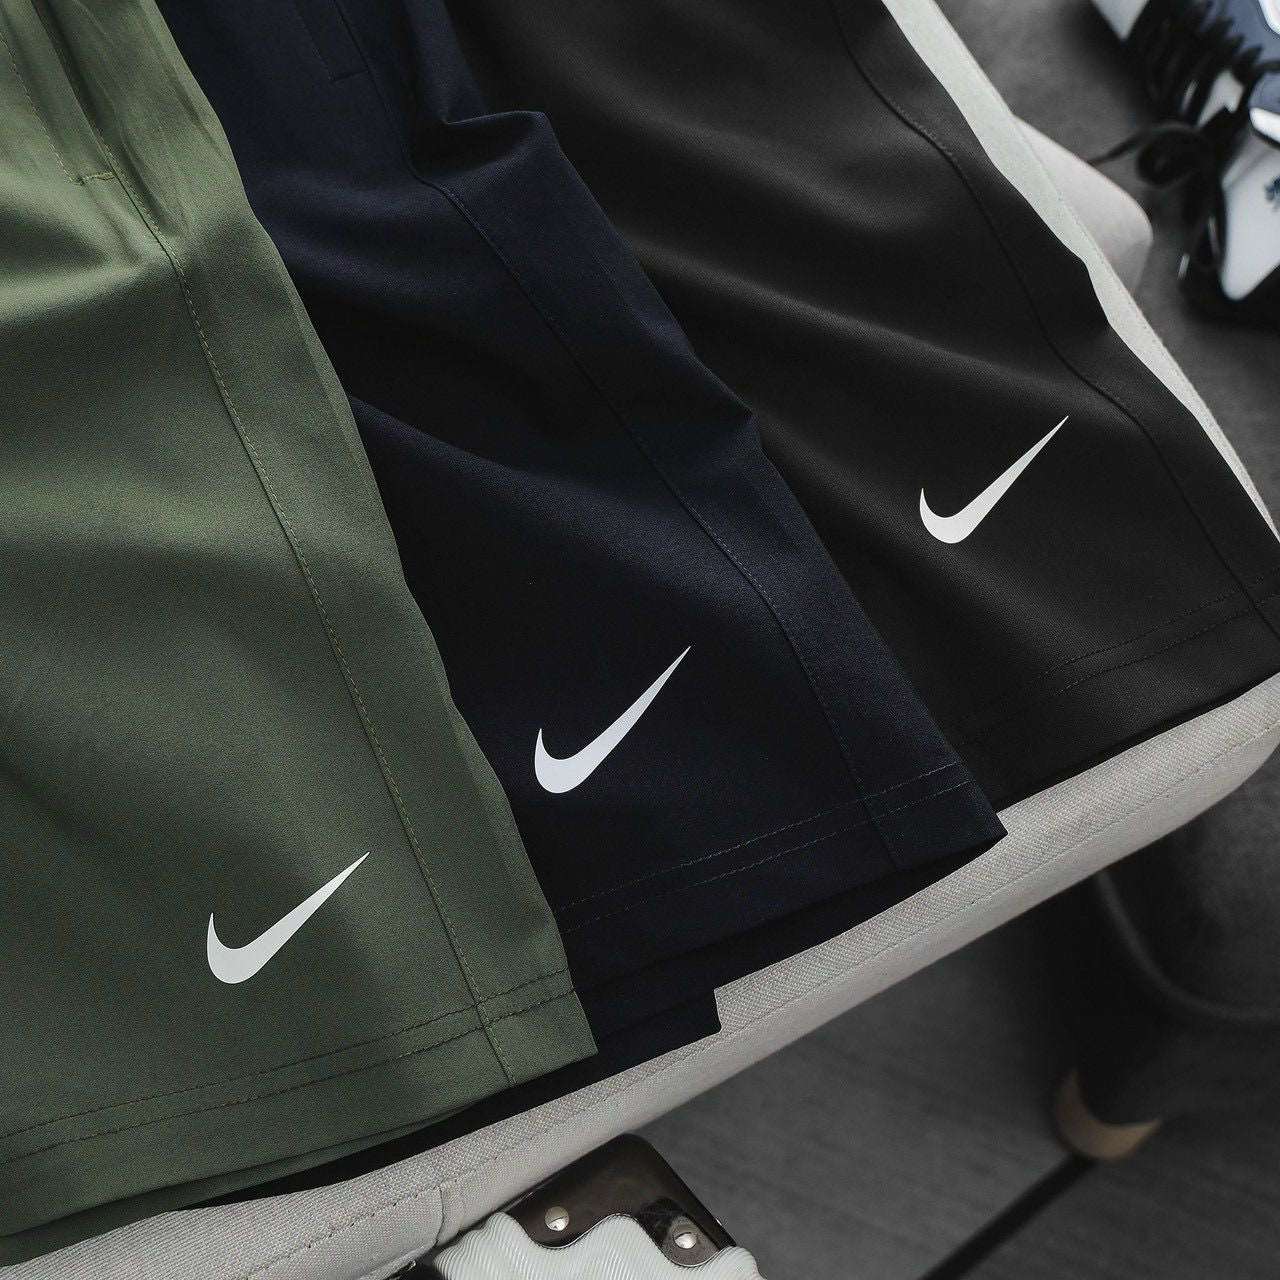 Nike Challenger Men’s Shorts Dri Fit